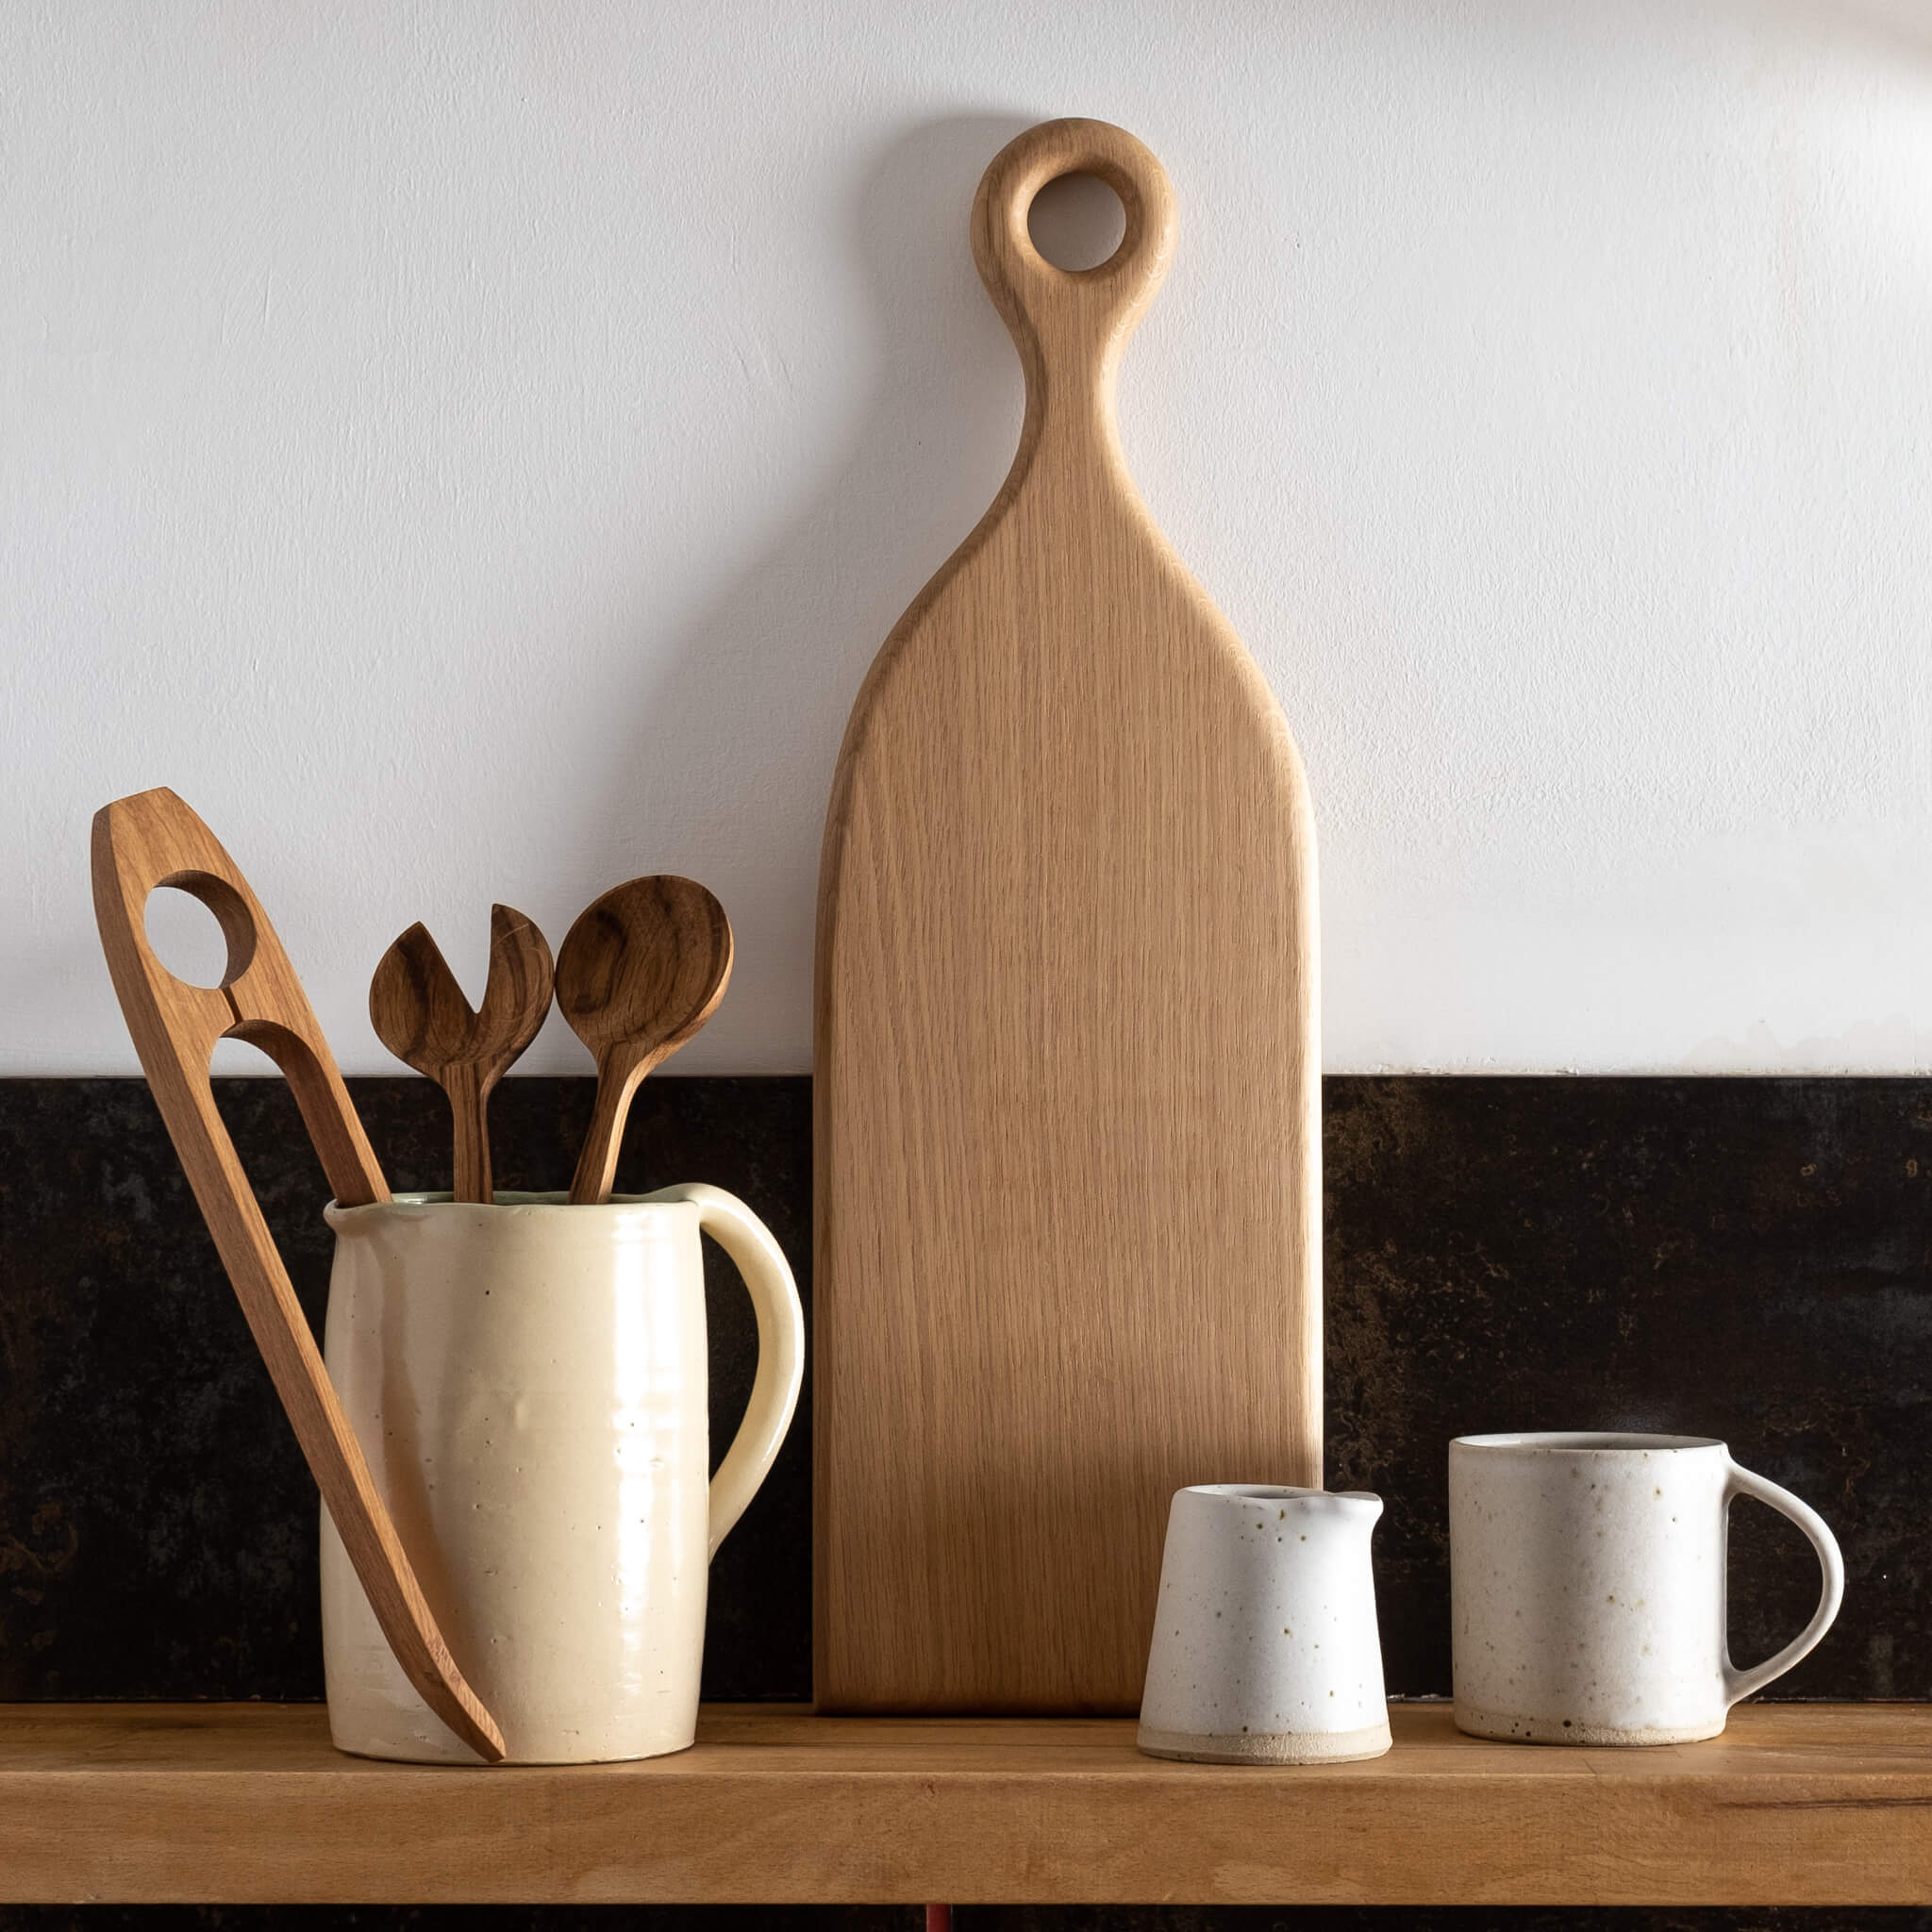 Forge Creative Long Oak Chopping Board on shelf with small jug, mug and utensils